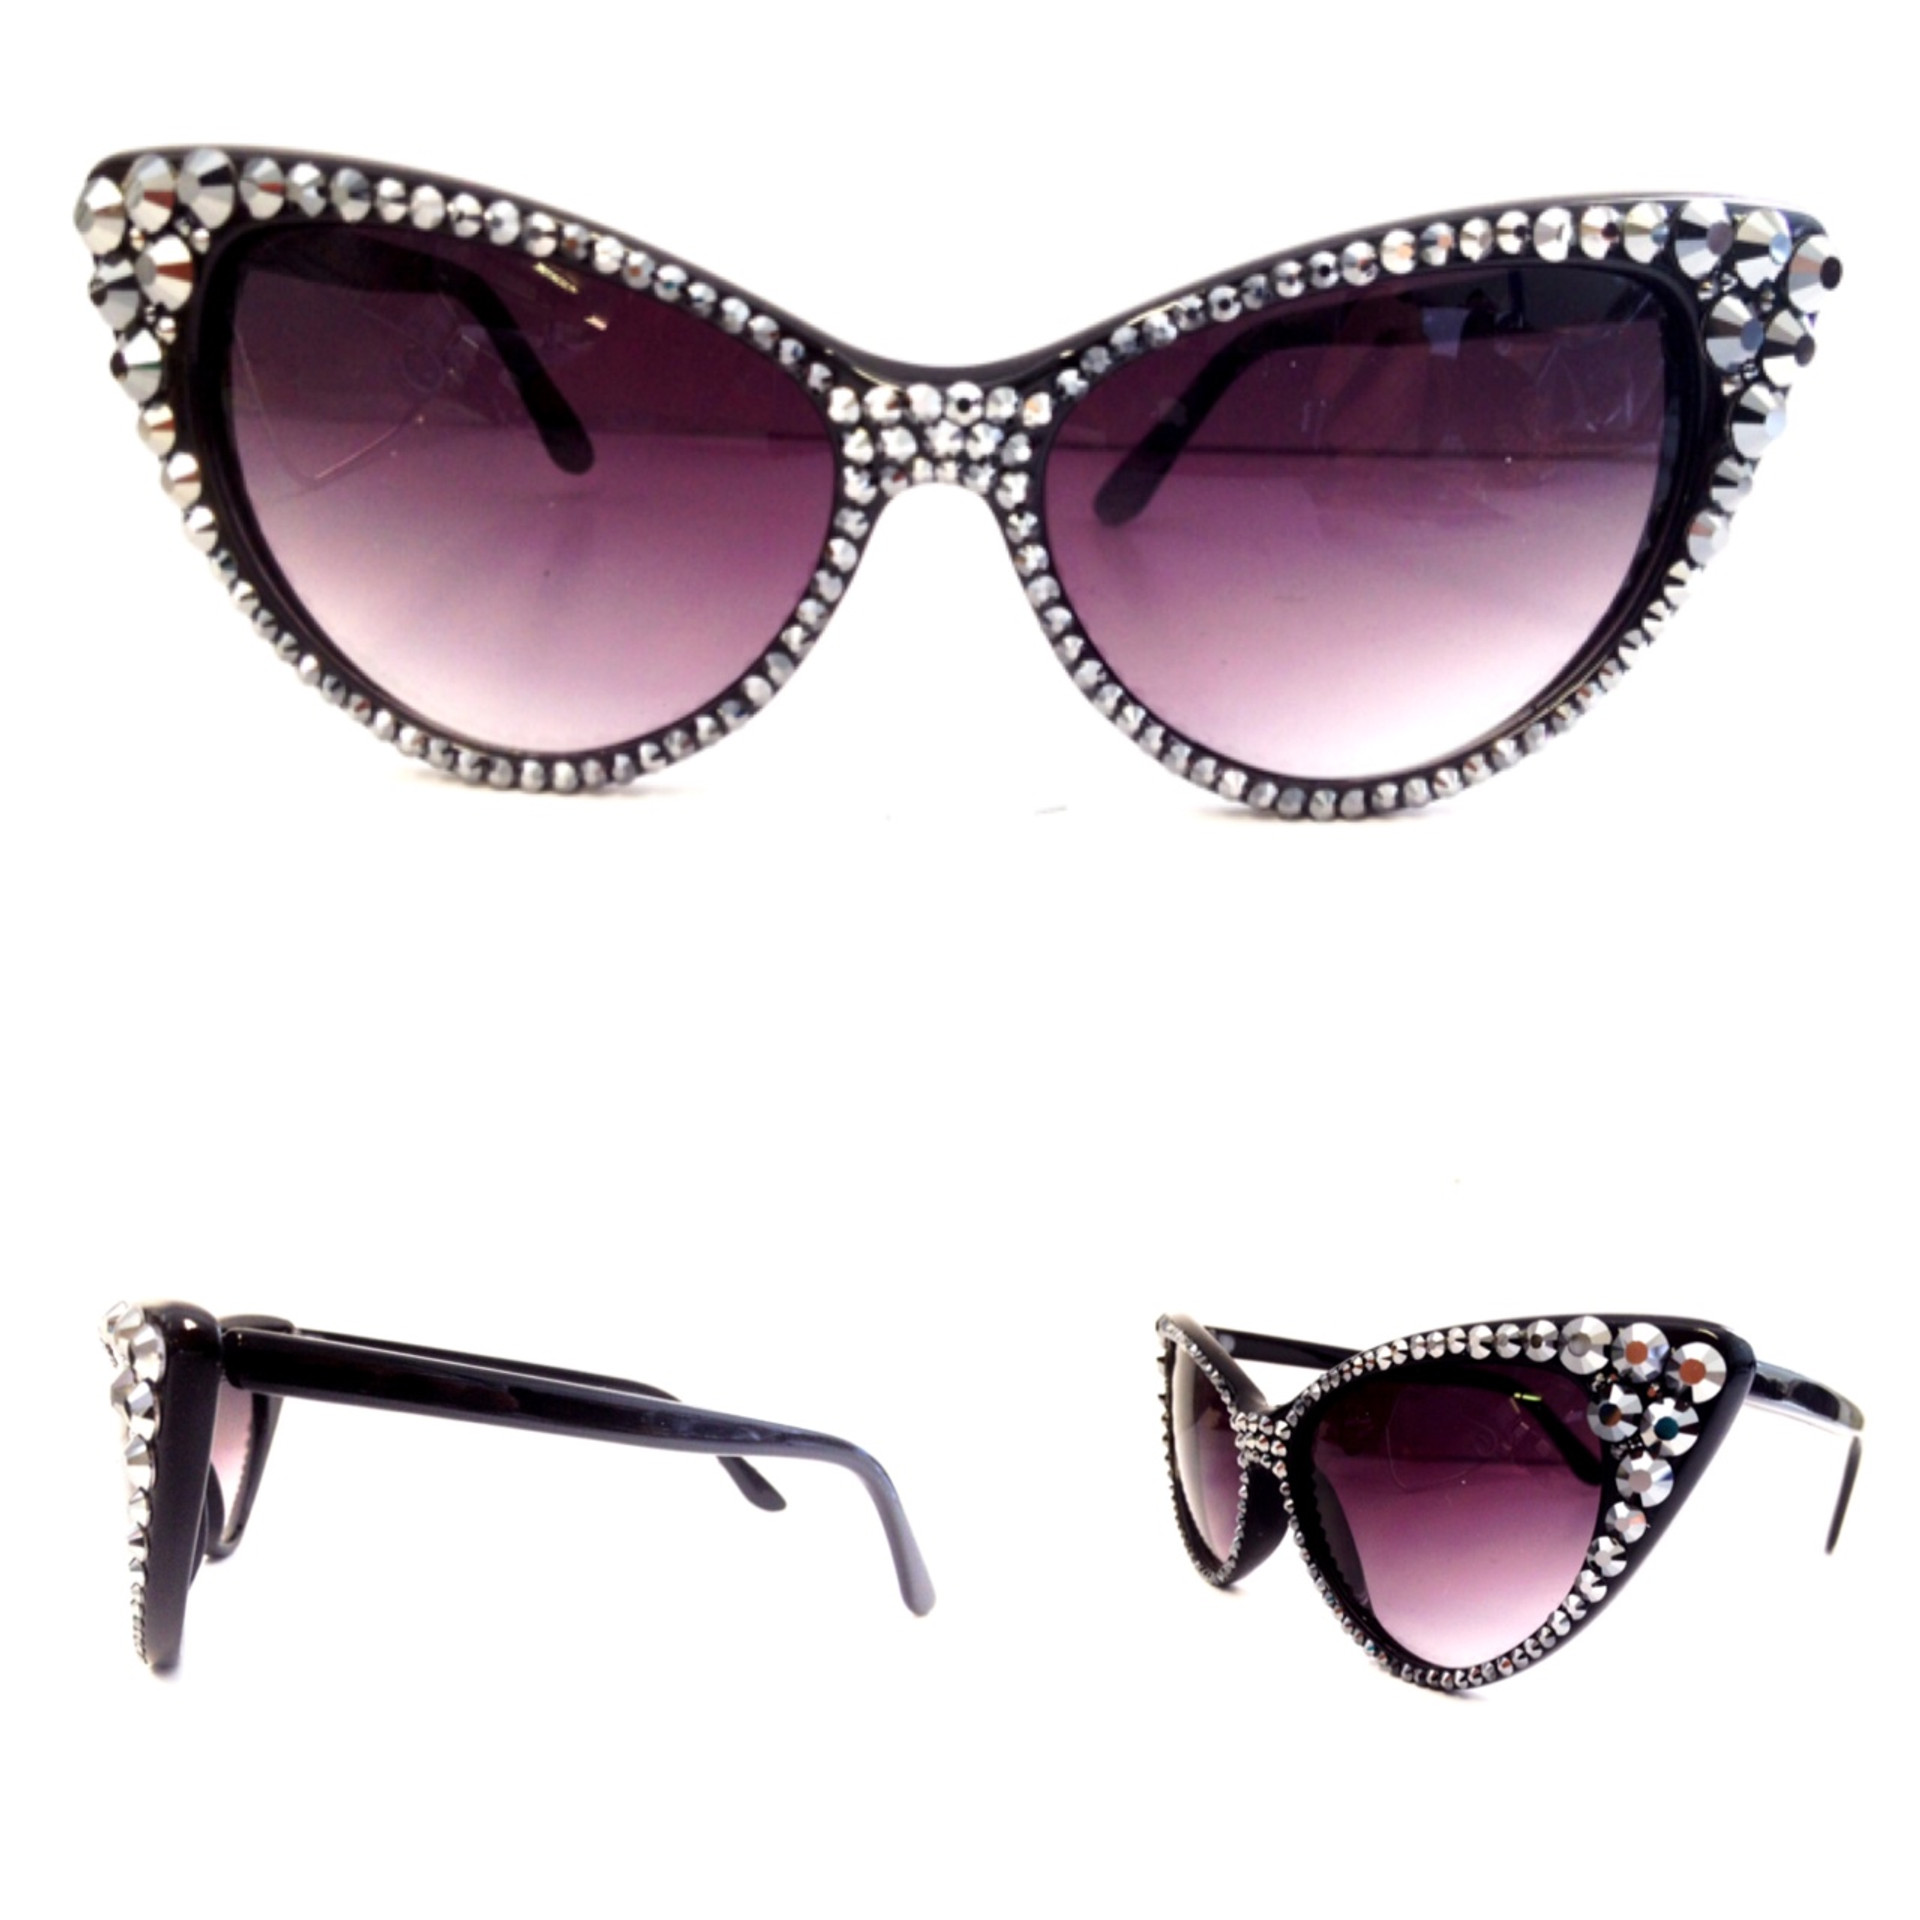 Felix Tip Sunglasses - Divalicious Eyewear